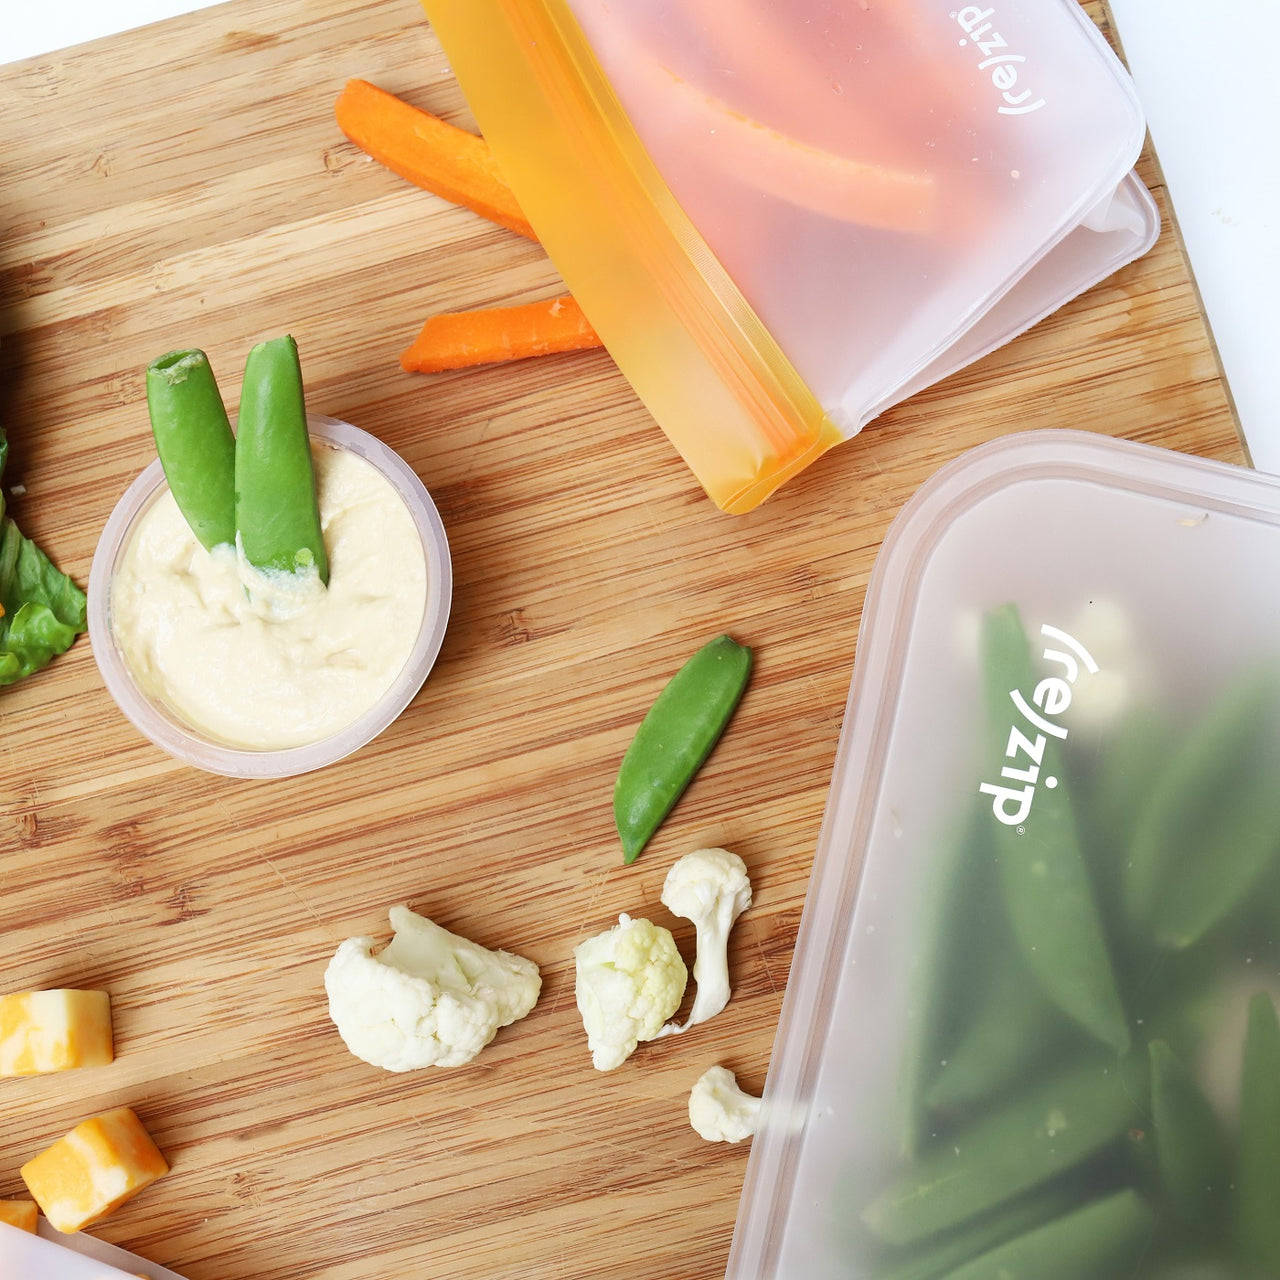 re)zip Reusable Leak-proof Food Storage Stand-up Starter Kit - Mini & Snack  - 5ct : Target